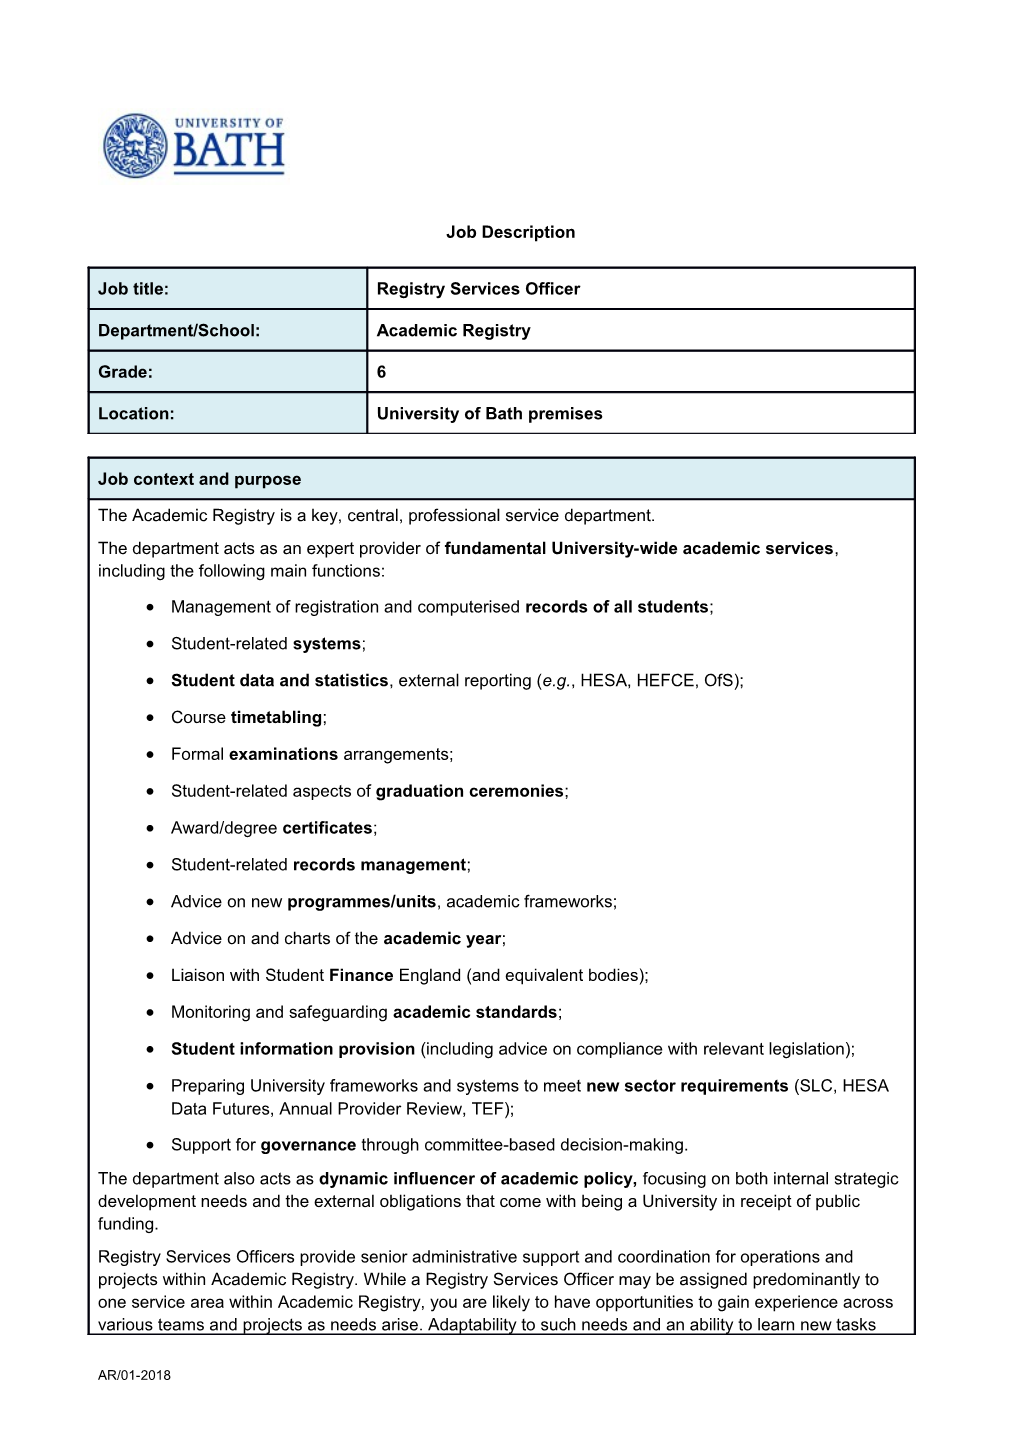 Registry Services Officer - Job Description